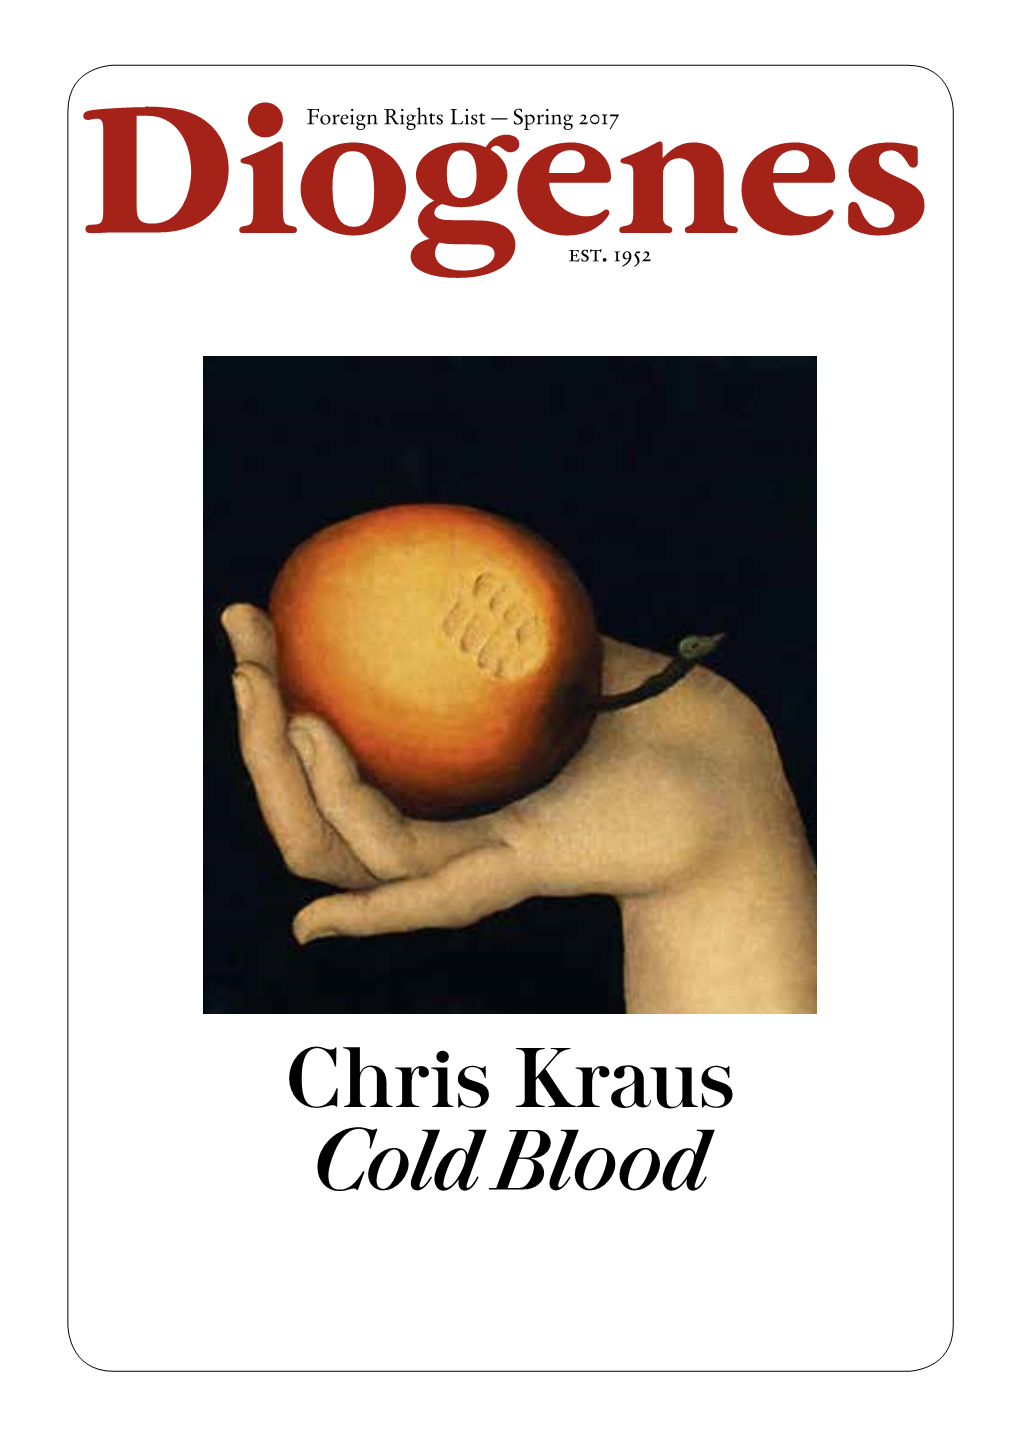 Chris Kraus Cold Blood Theatre Exhibitions Anniversary